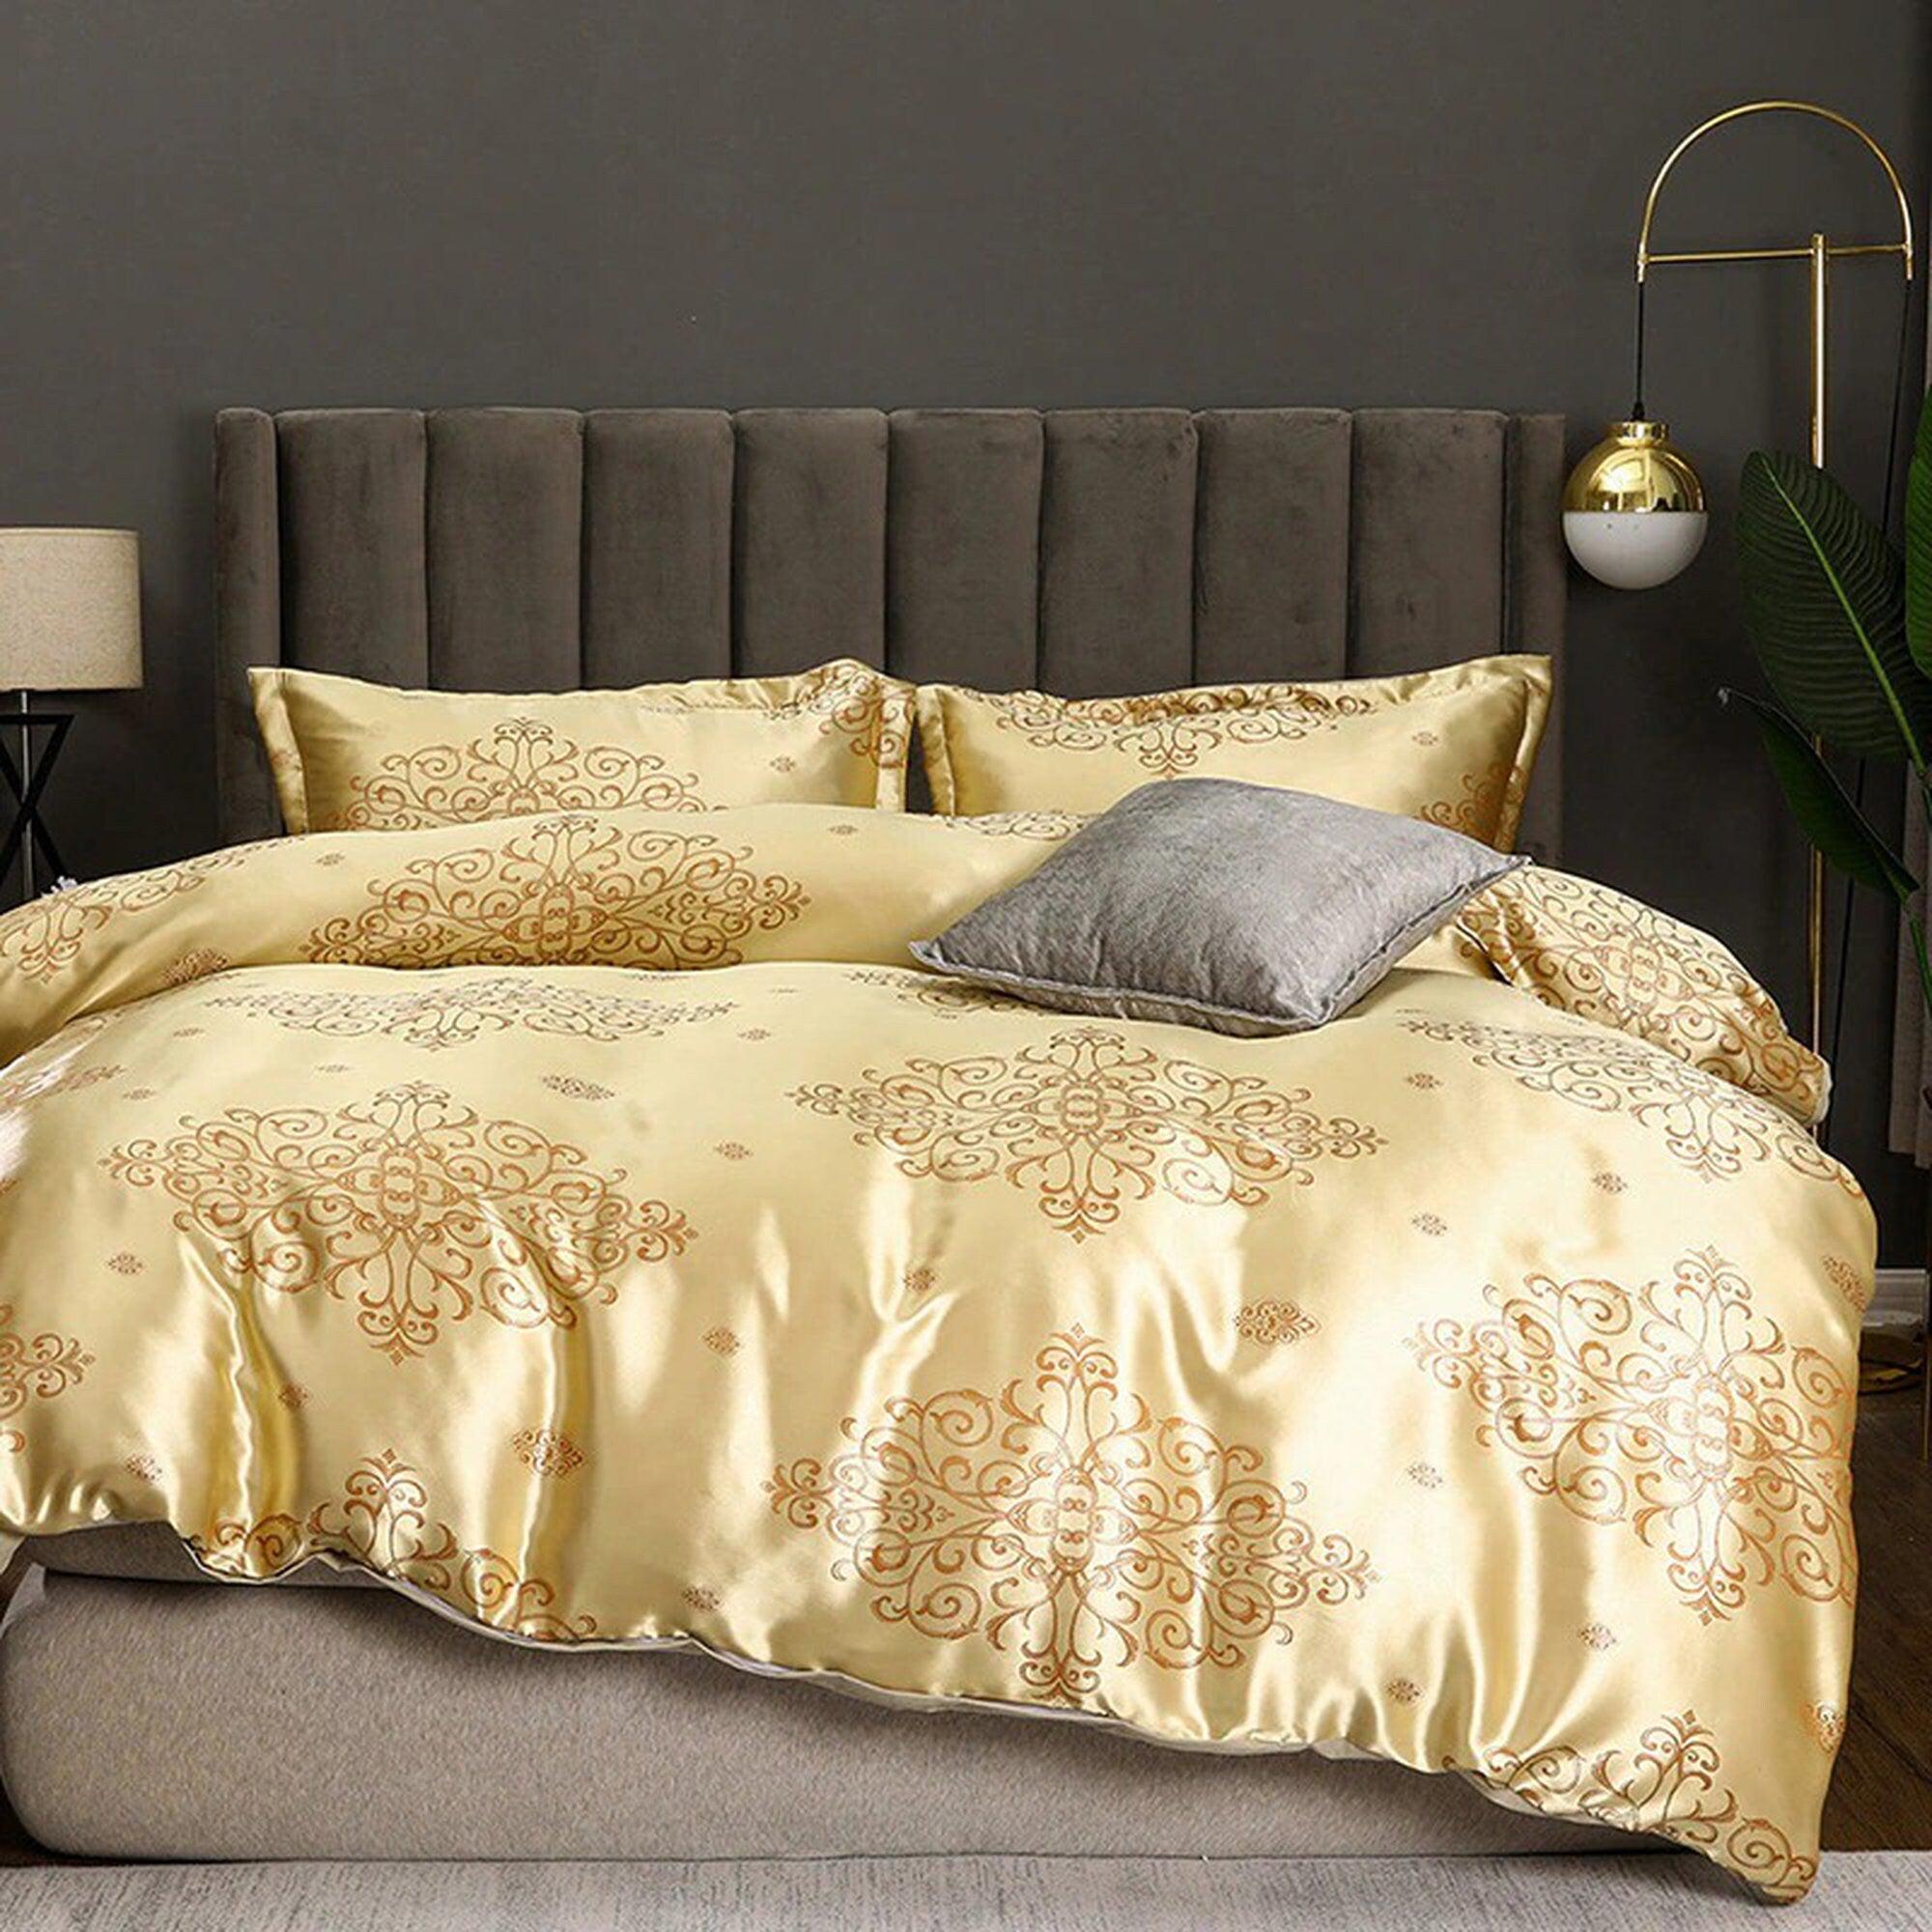 daintyduvet Luxury Baroque Gold Bedding made with Silky Jacquard Fabric, Damask Duvet Cover Set, Designer Bedding, Aesthetic Duvet King Queen Full Twin